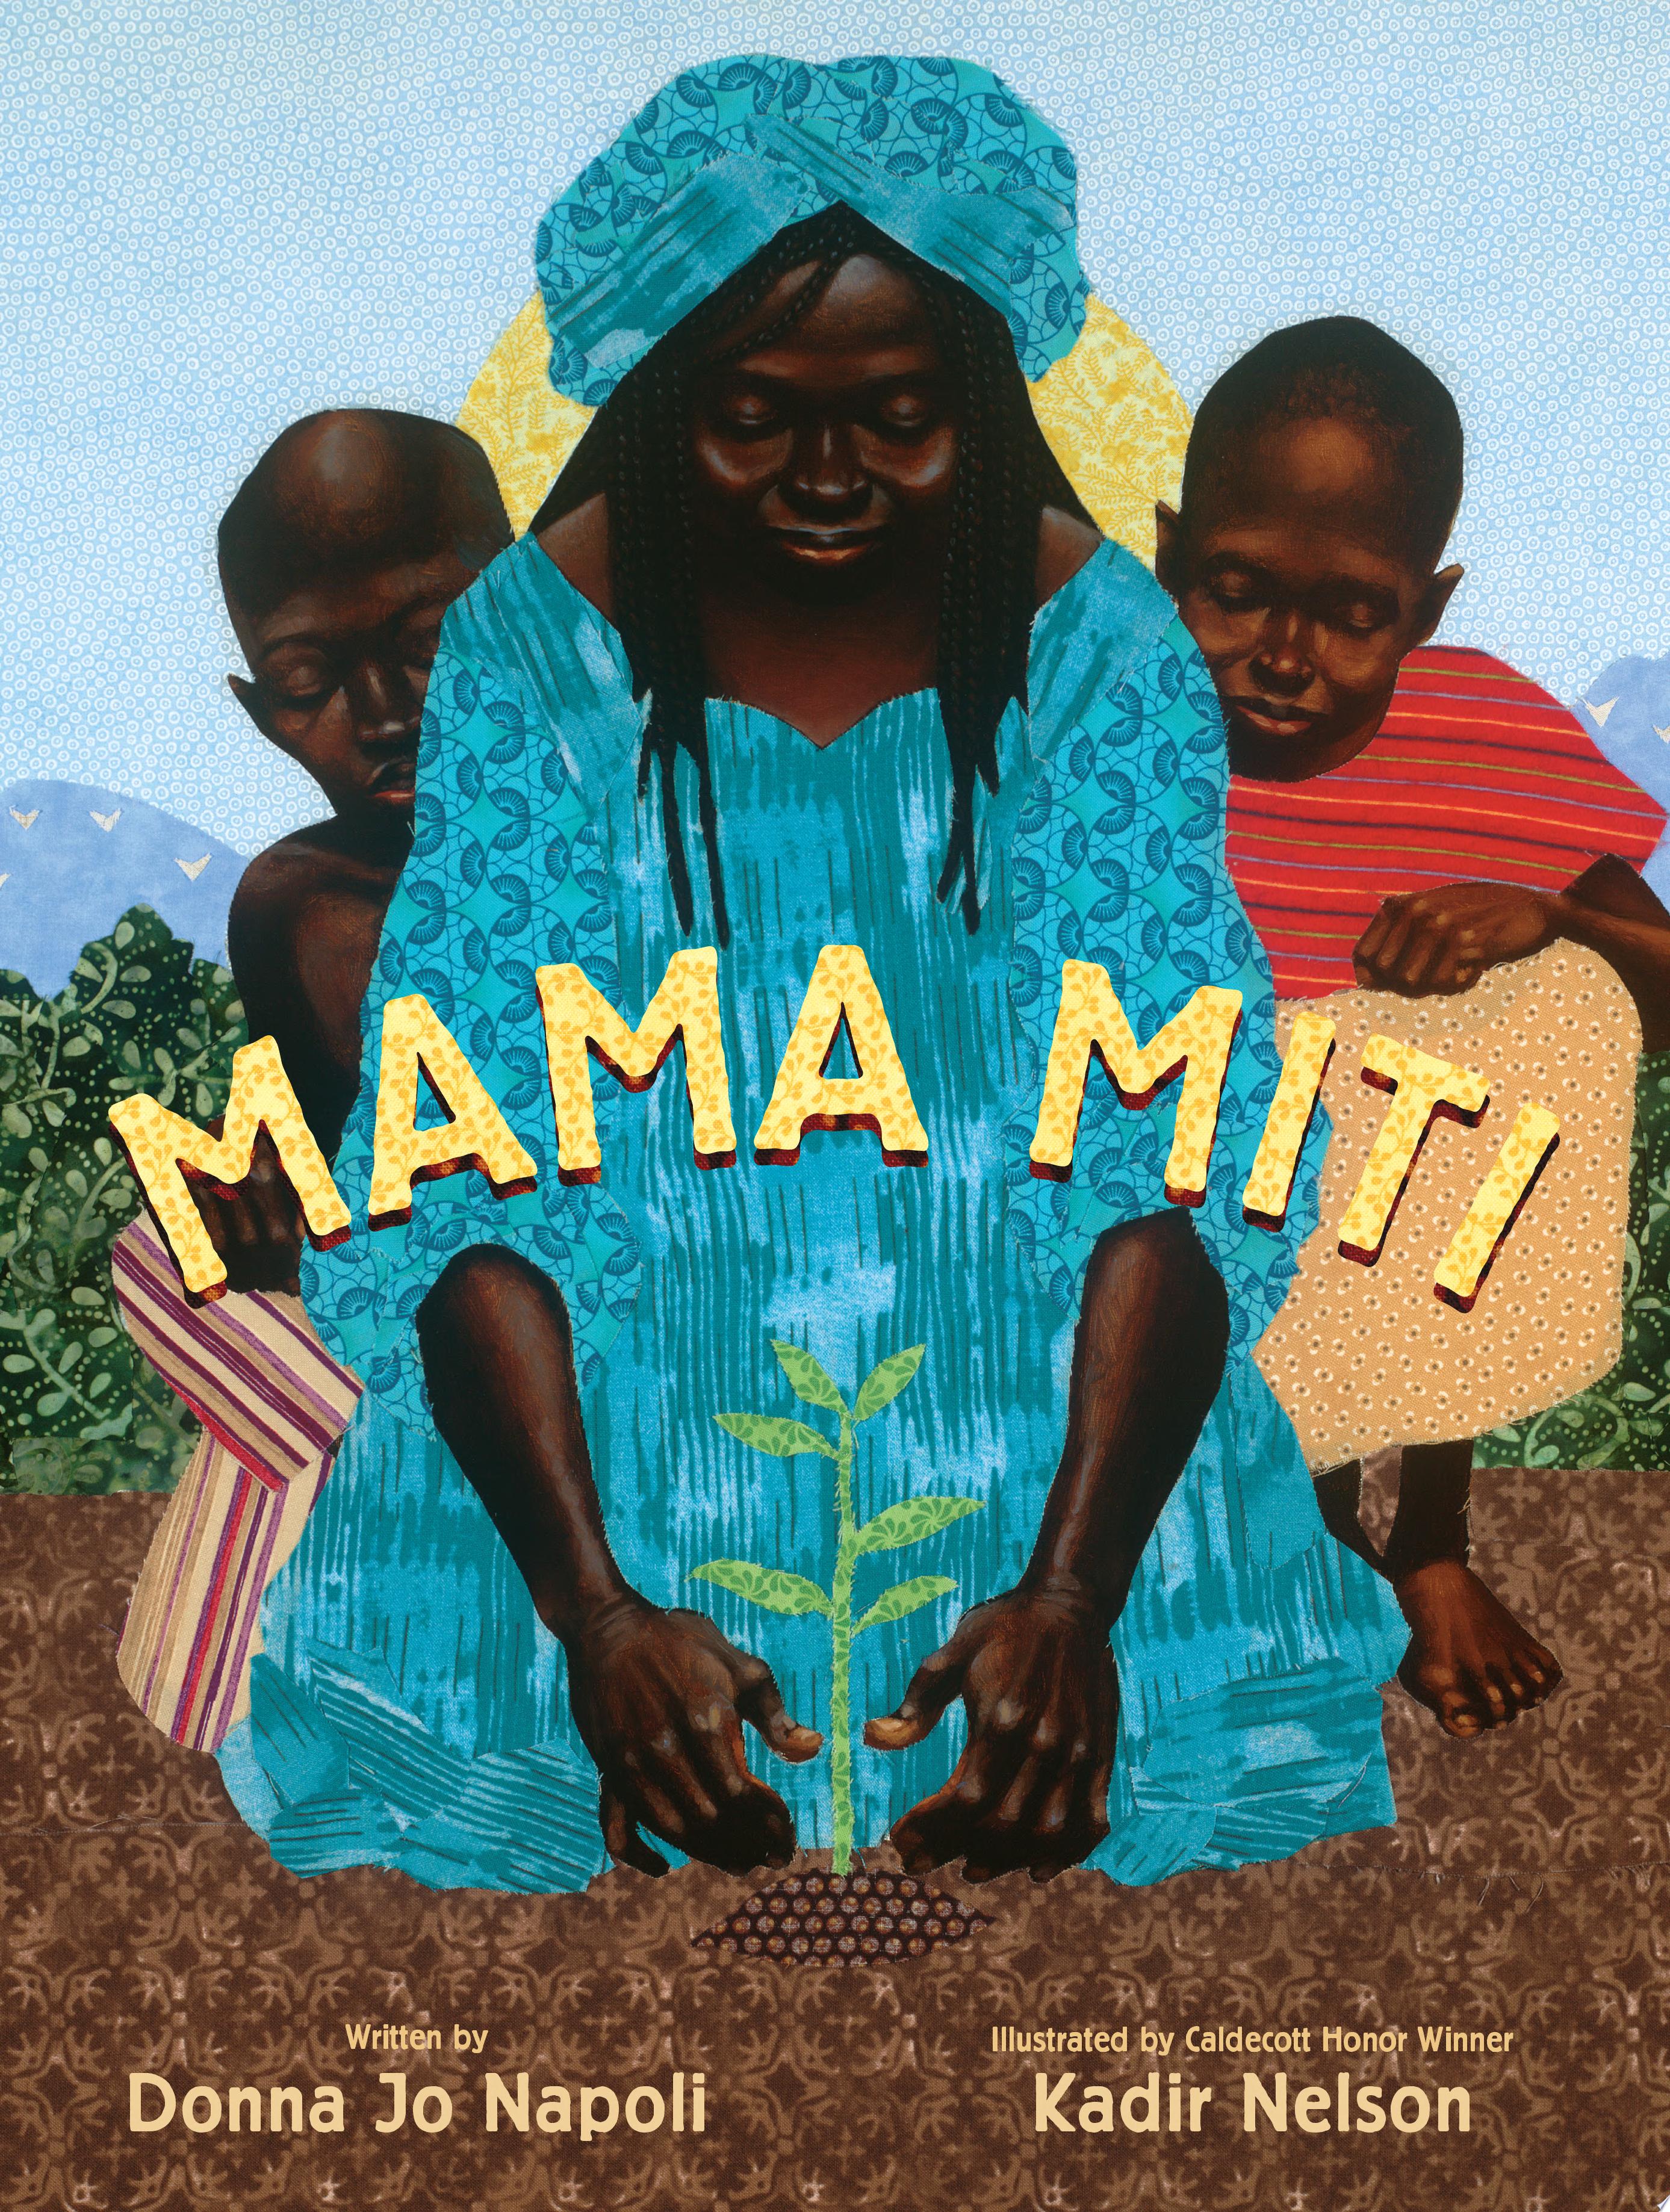 Image for "Mama Miti"